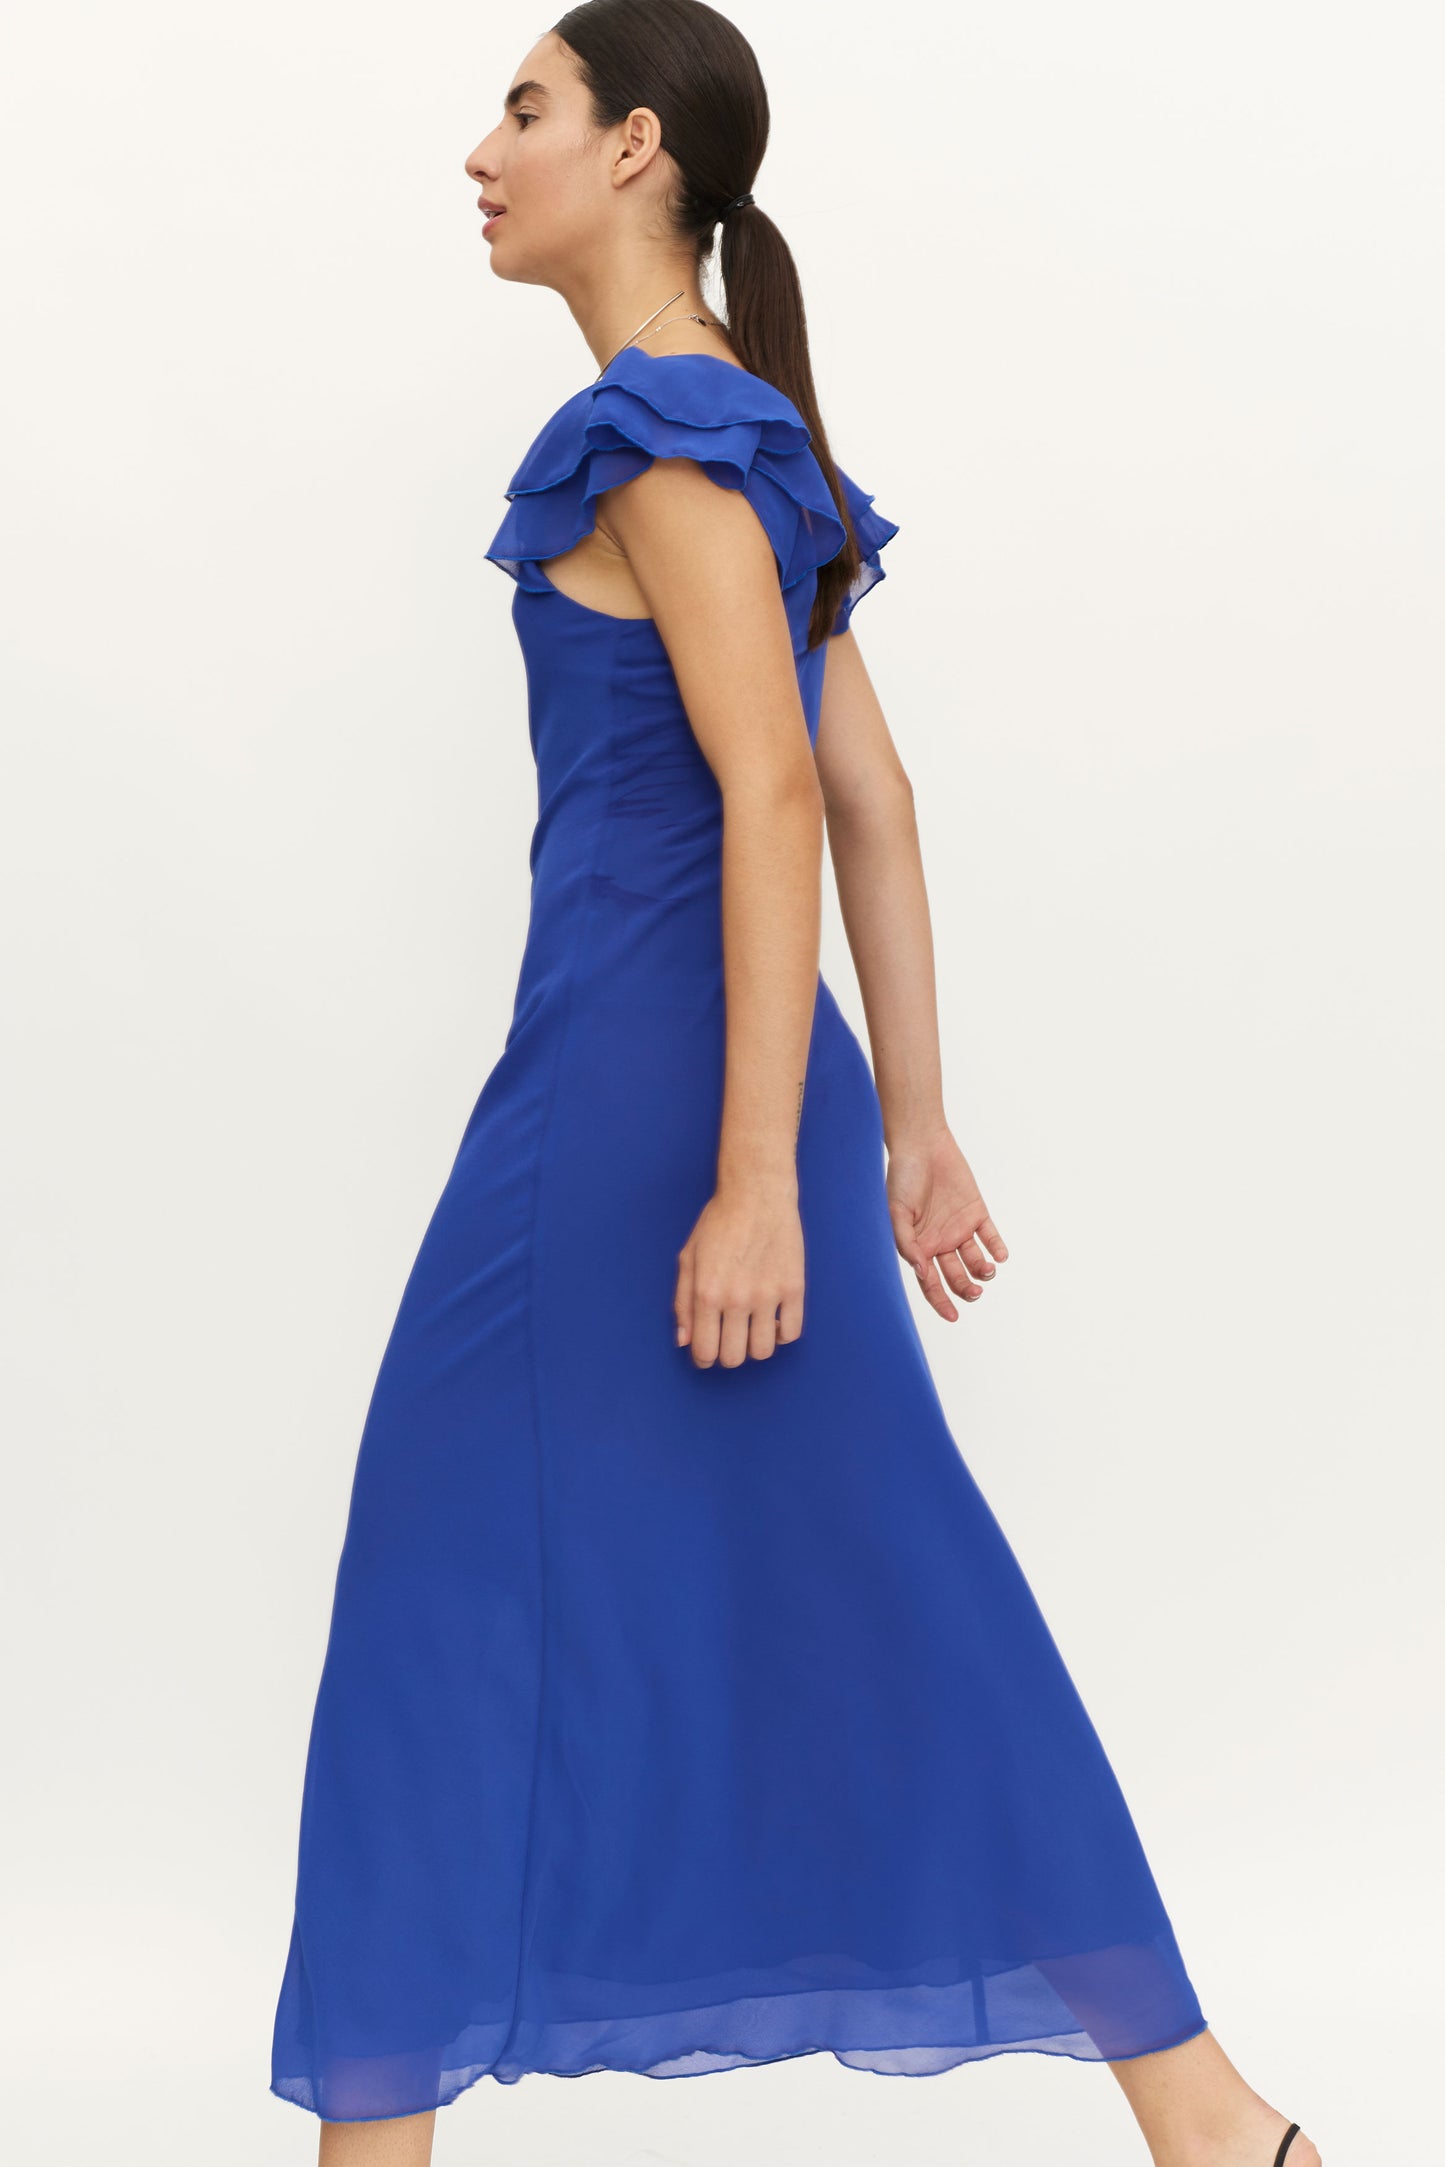 Long blue V-neck dress